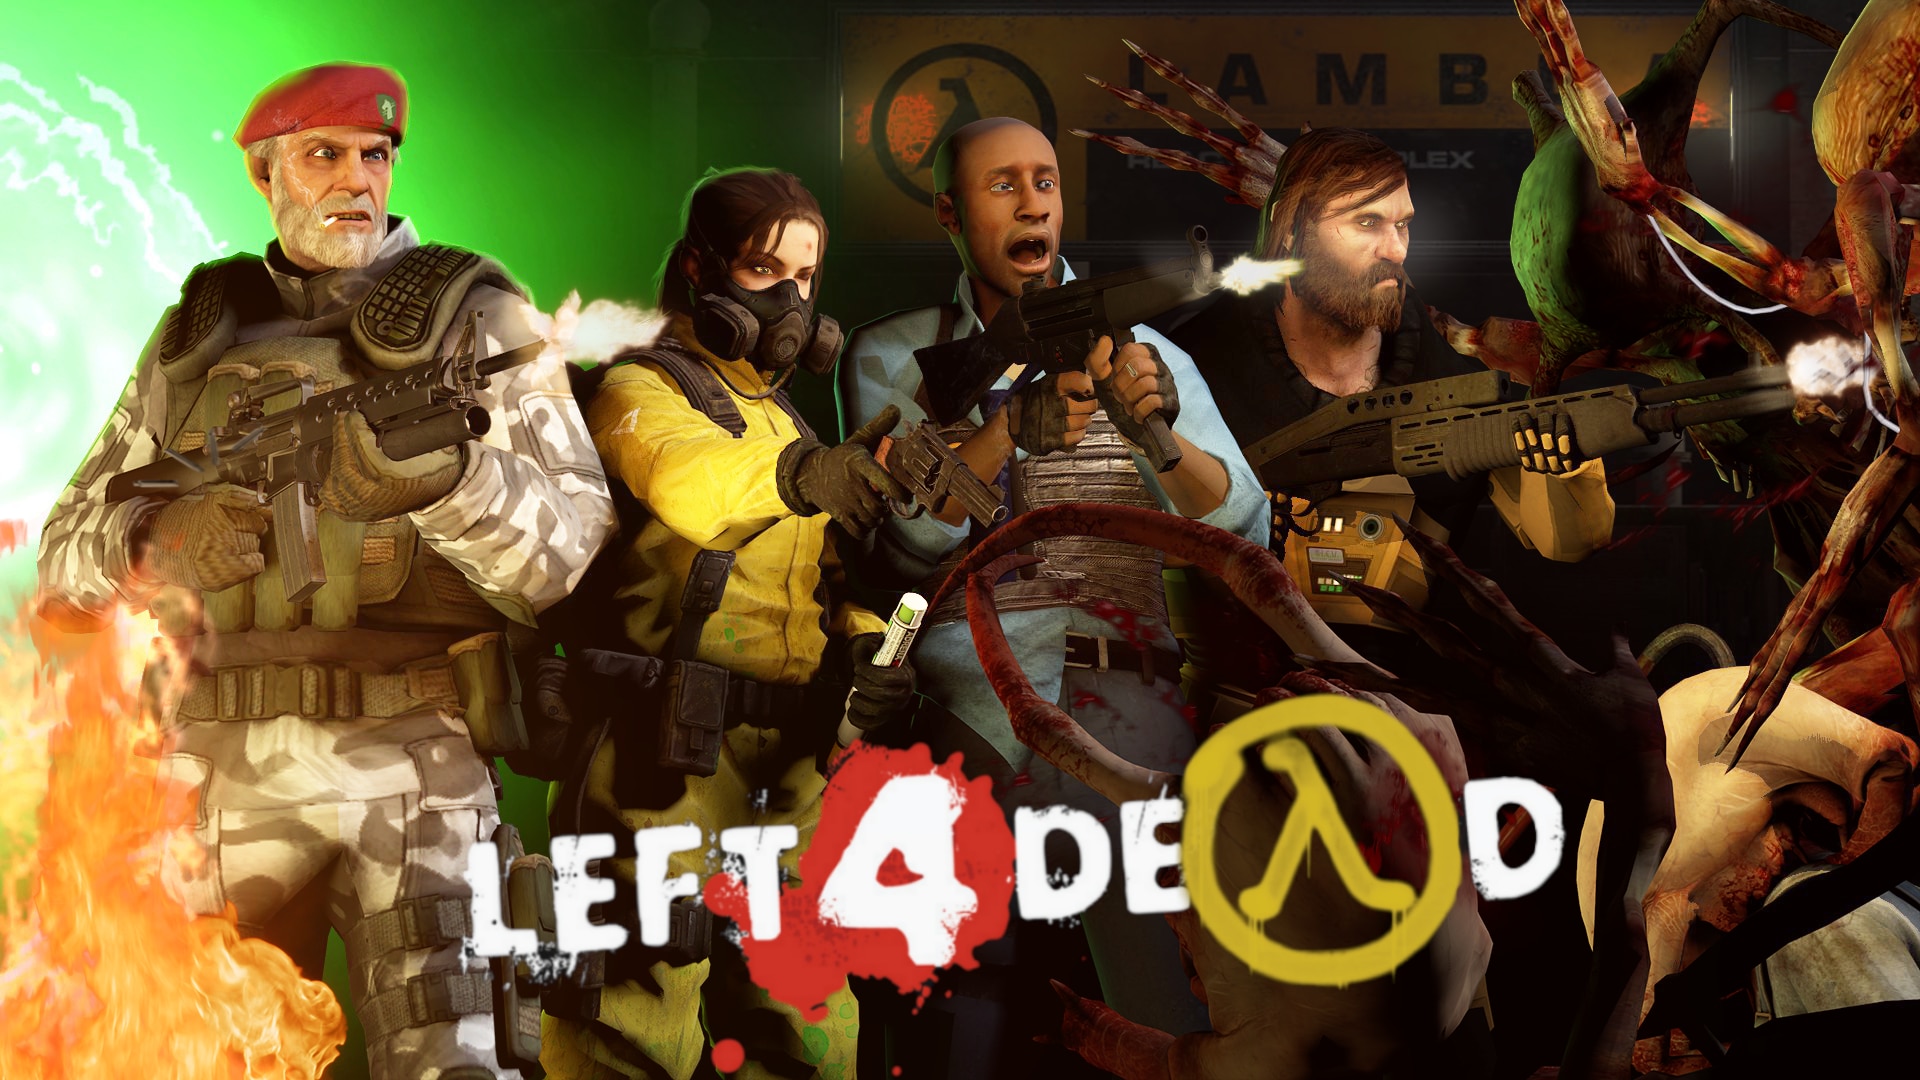 Evil Dead: The Game Menu Music (Mod) for Left 4 Dead 2 